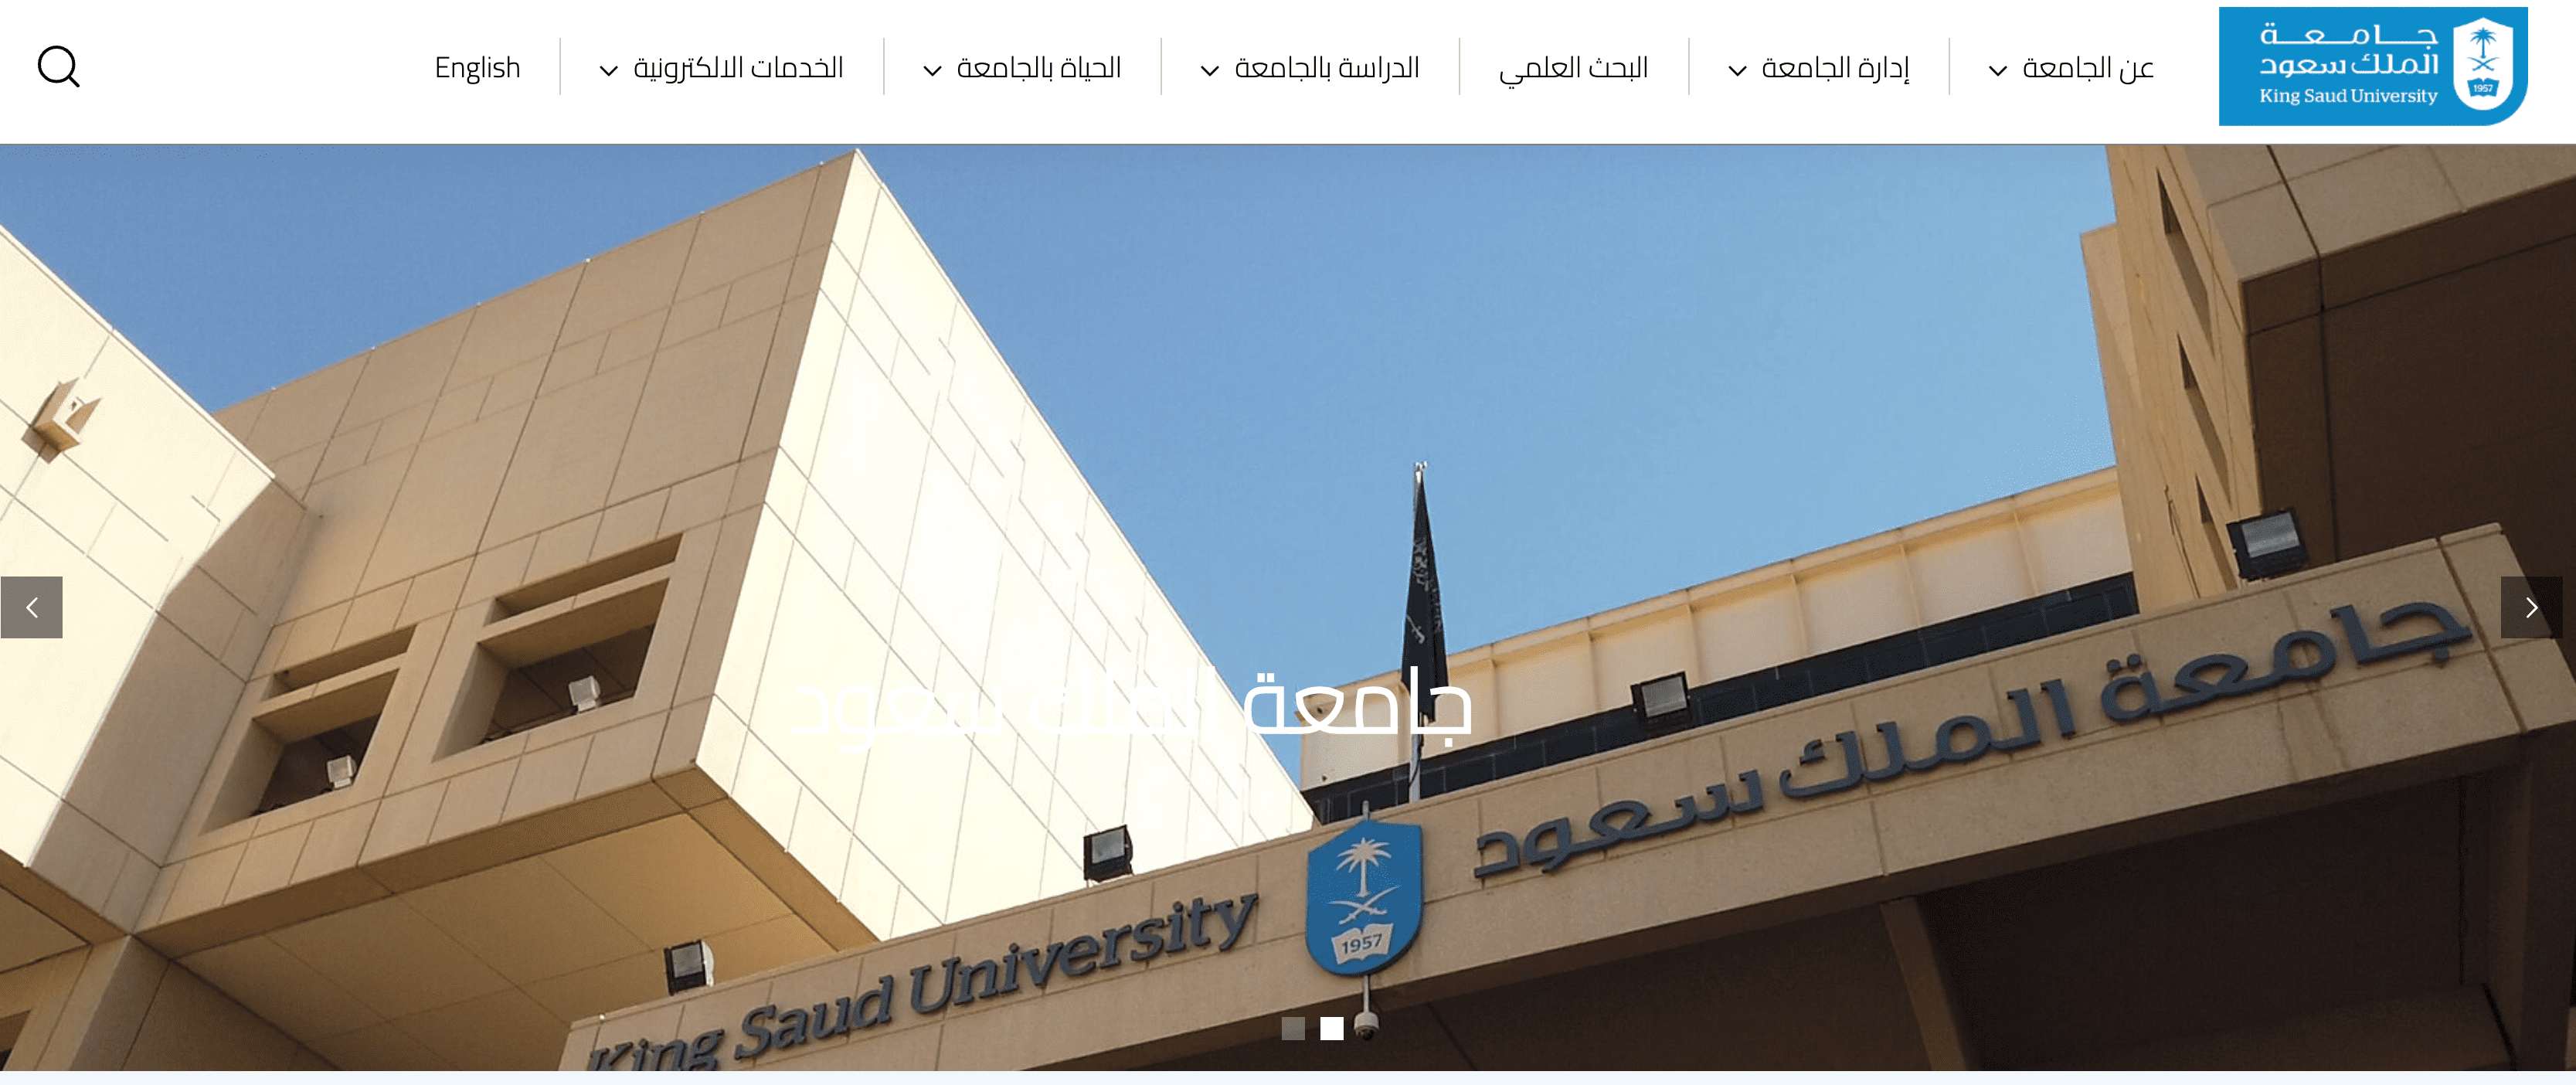 King Saud University Drupal Website